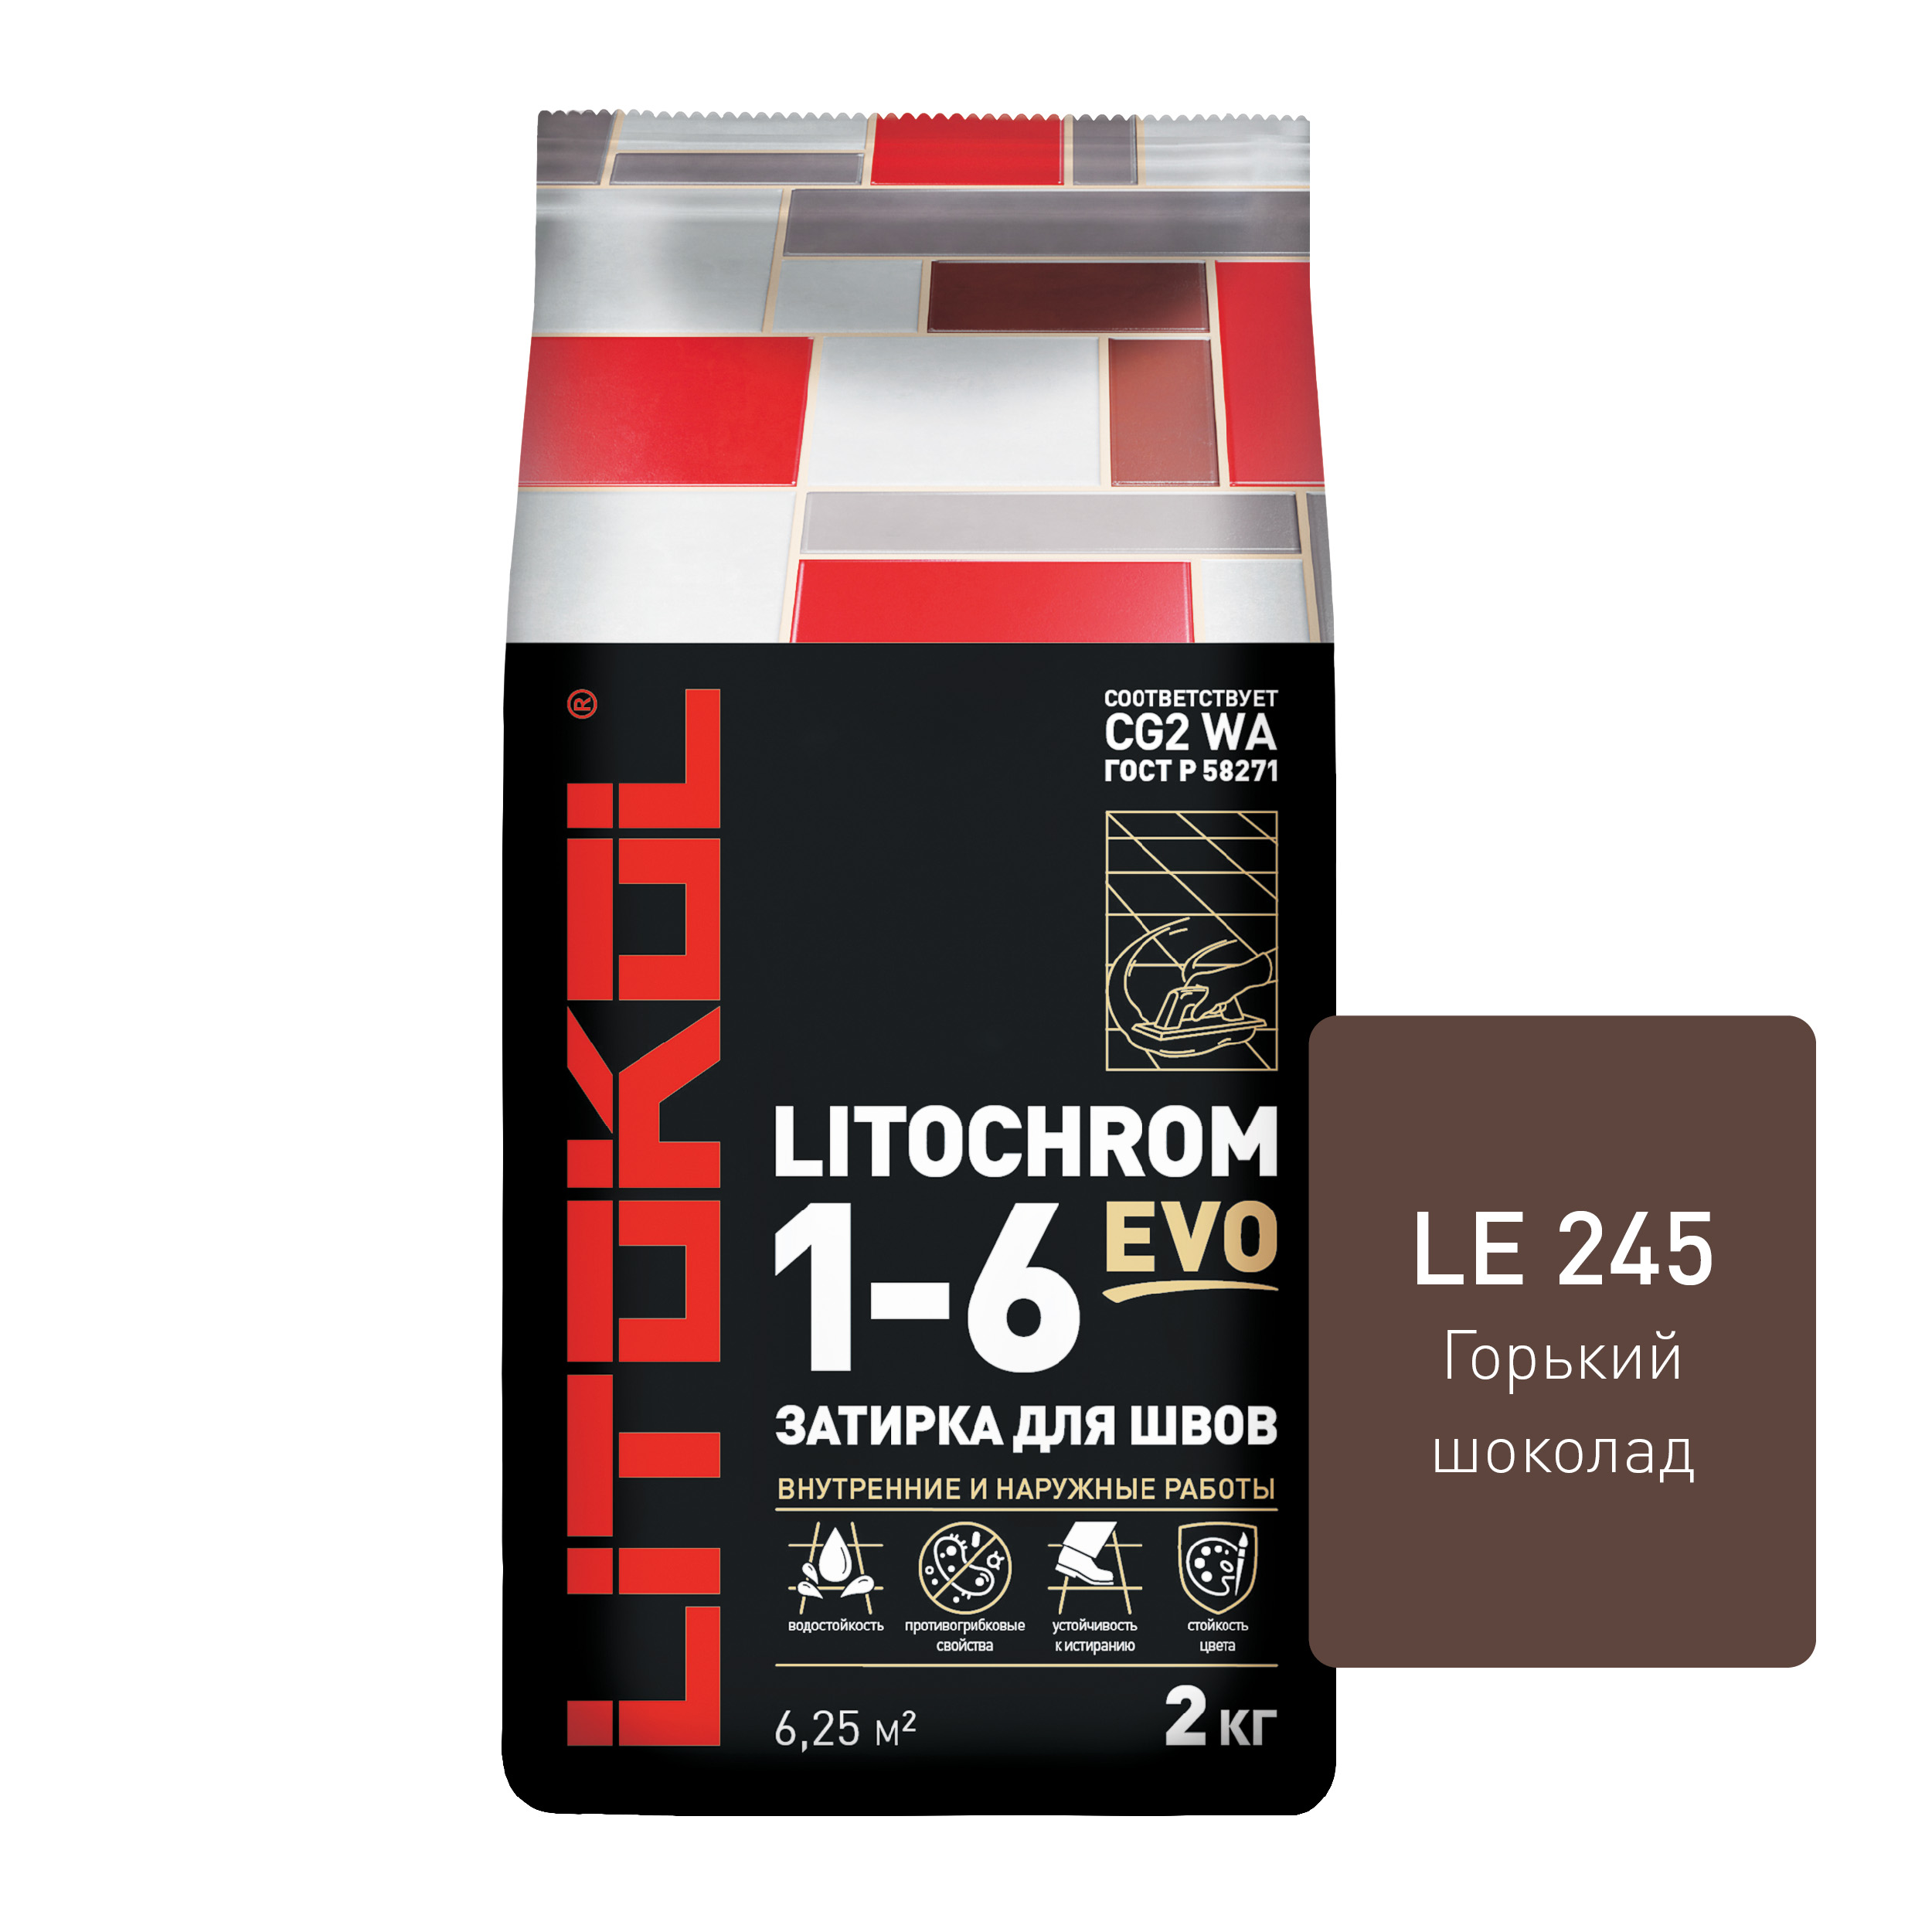 Цементная затирка LITOKOL LITOCHROM 1-6 EVO LE.245 Горький шоколад, 2 кг